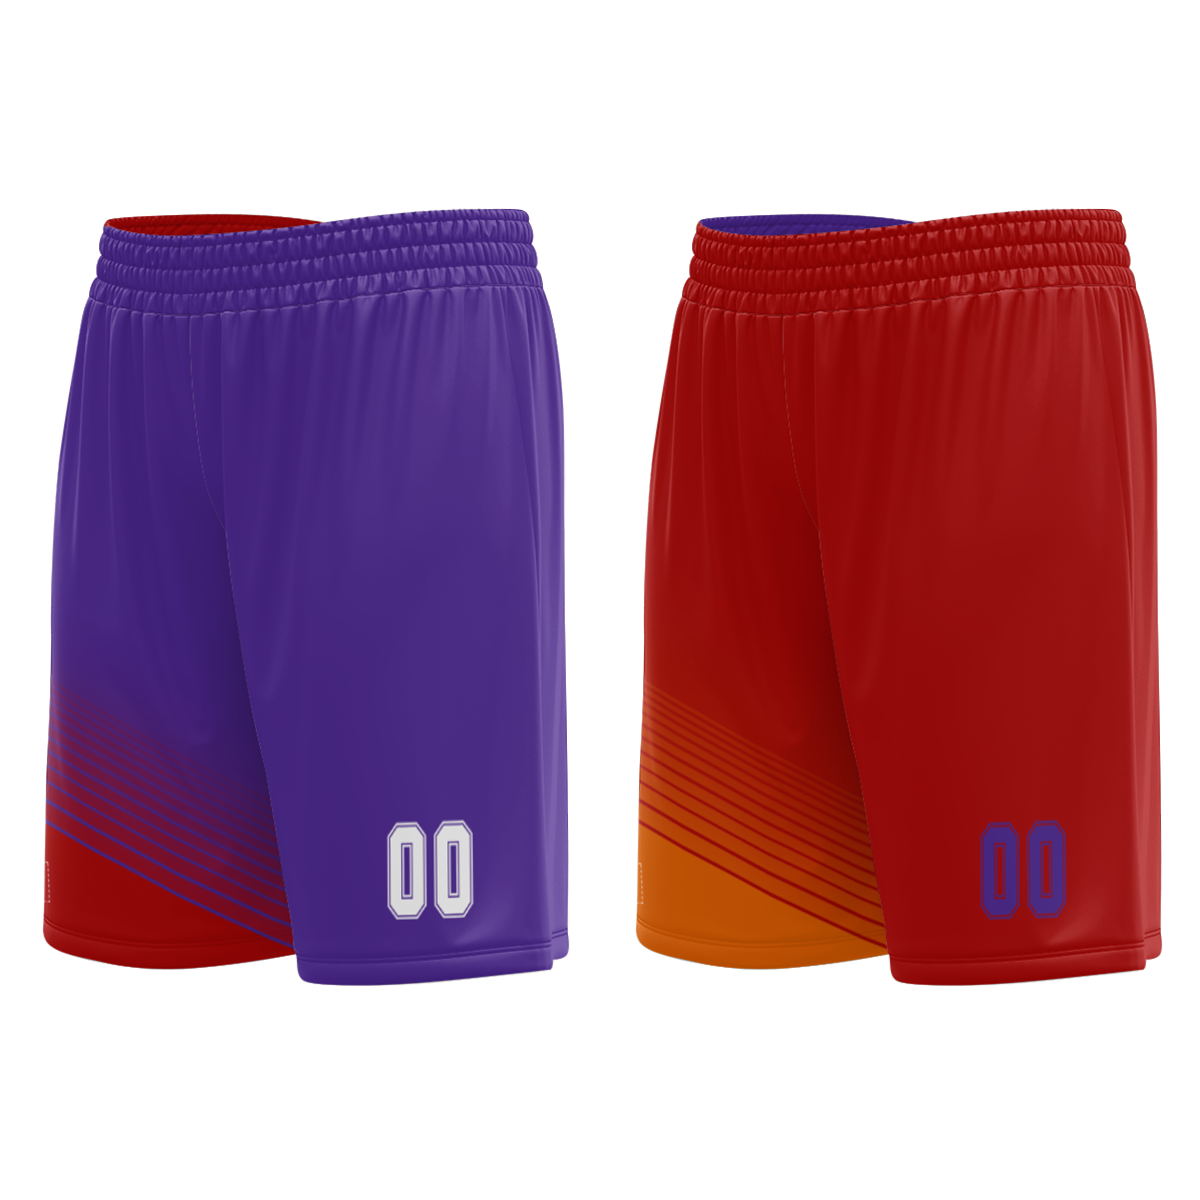 custom-sports-uniform-jerseys-printed-sublimation-reversible-athletic-team-basketball-vest-jersey-wear-for-men-women-at-cj-pod-8